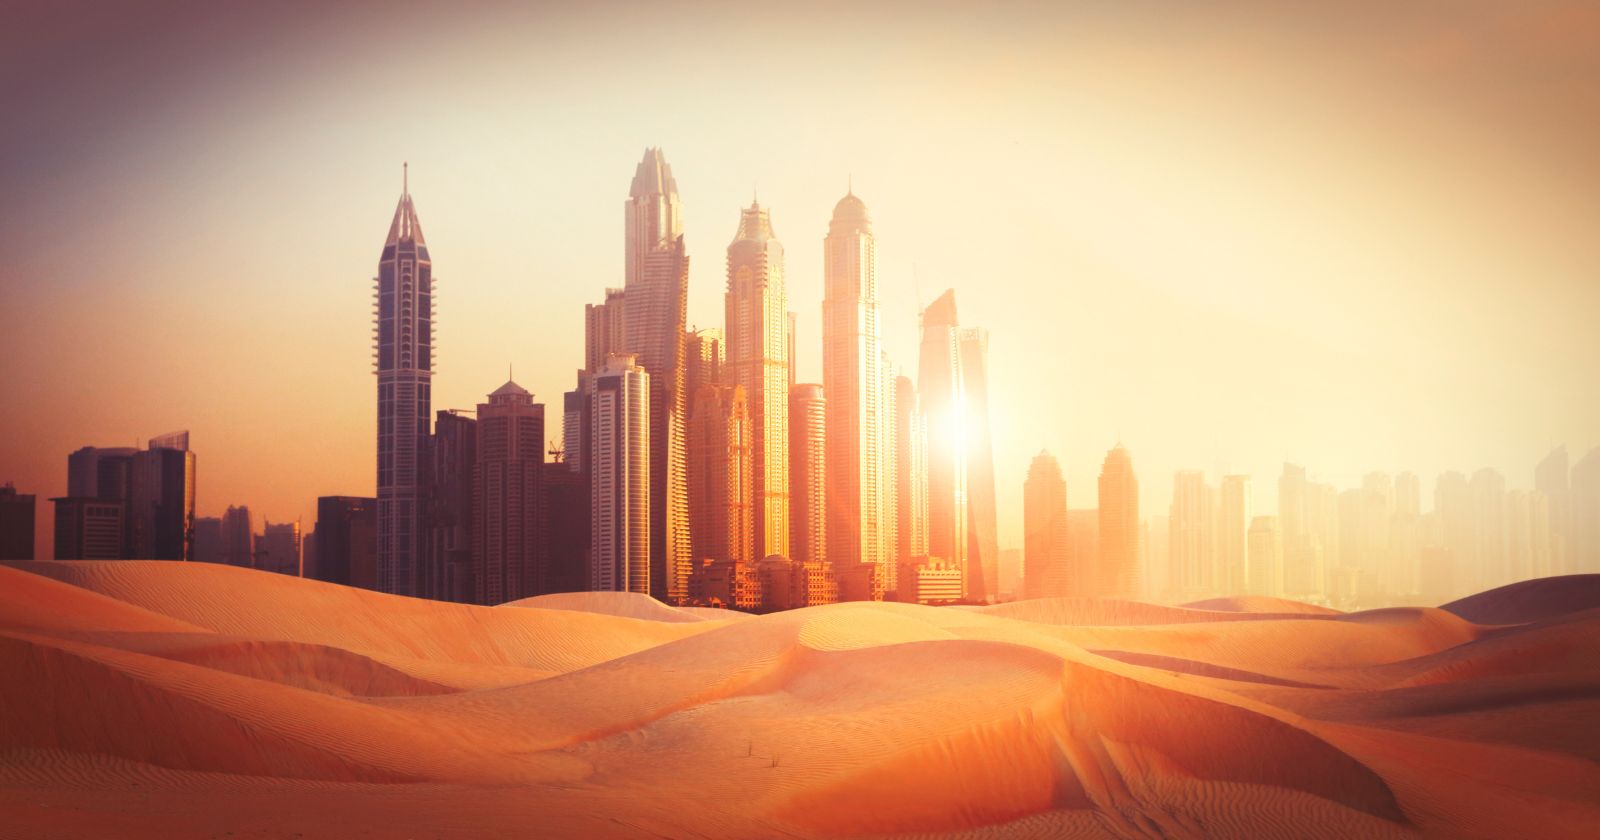 Dubai - A Modern Oasis in the Desert